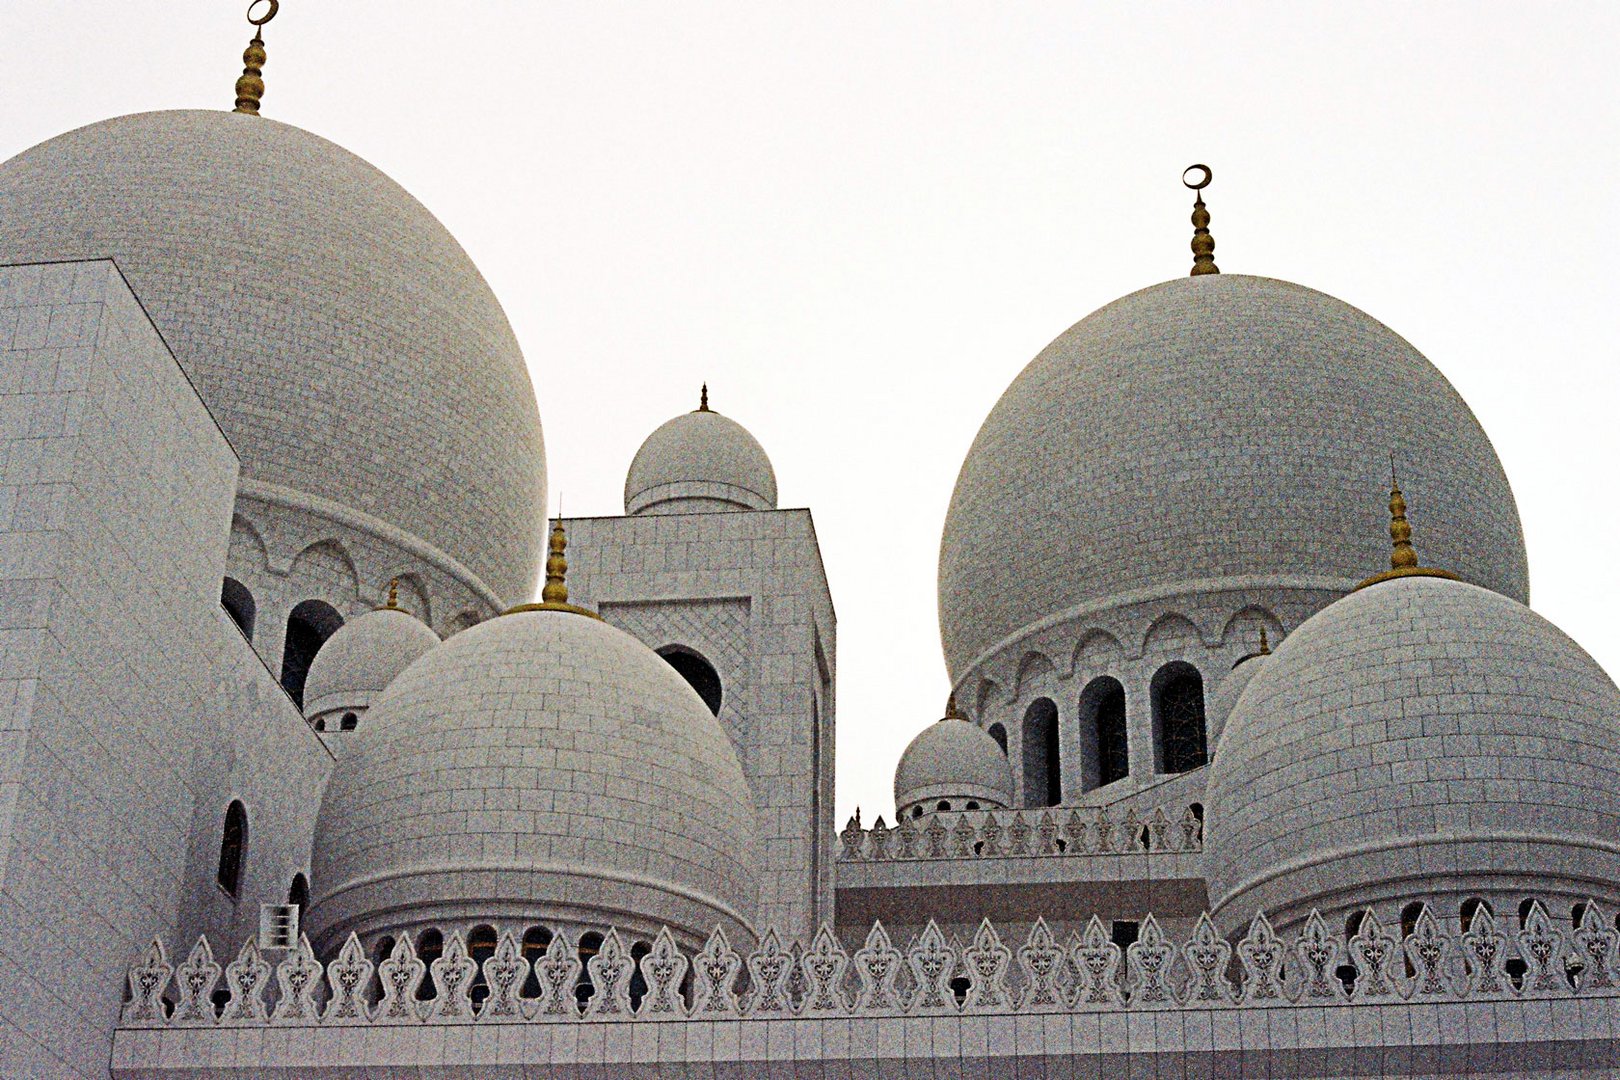 Grand Mosque 2 - Abu Dhabi